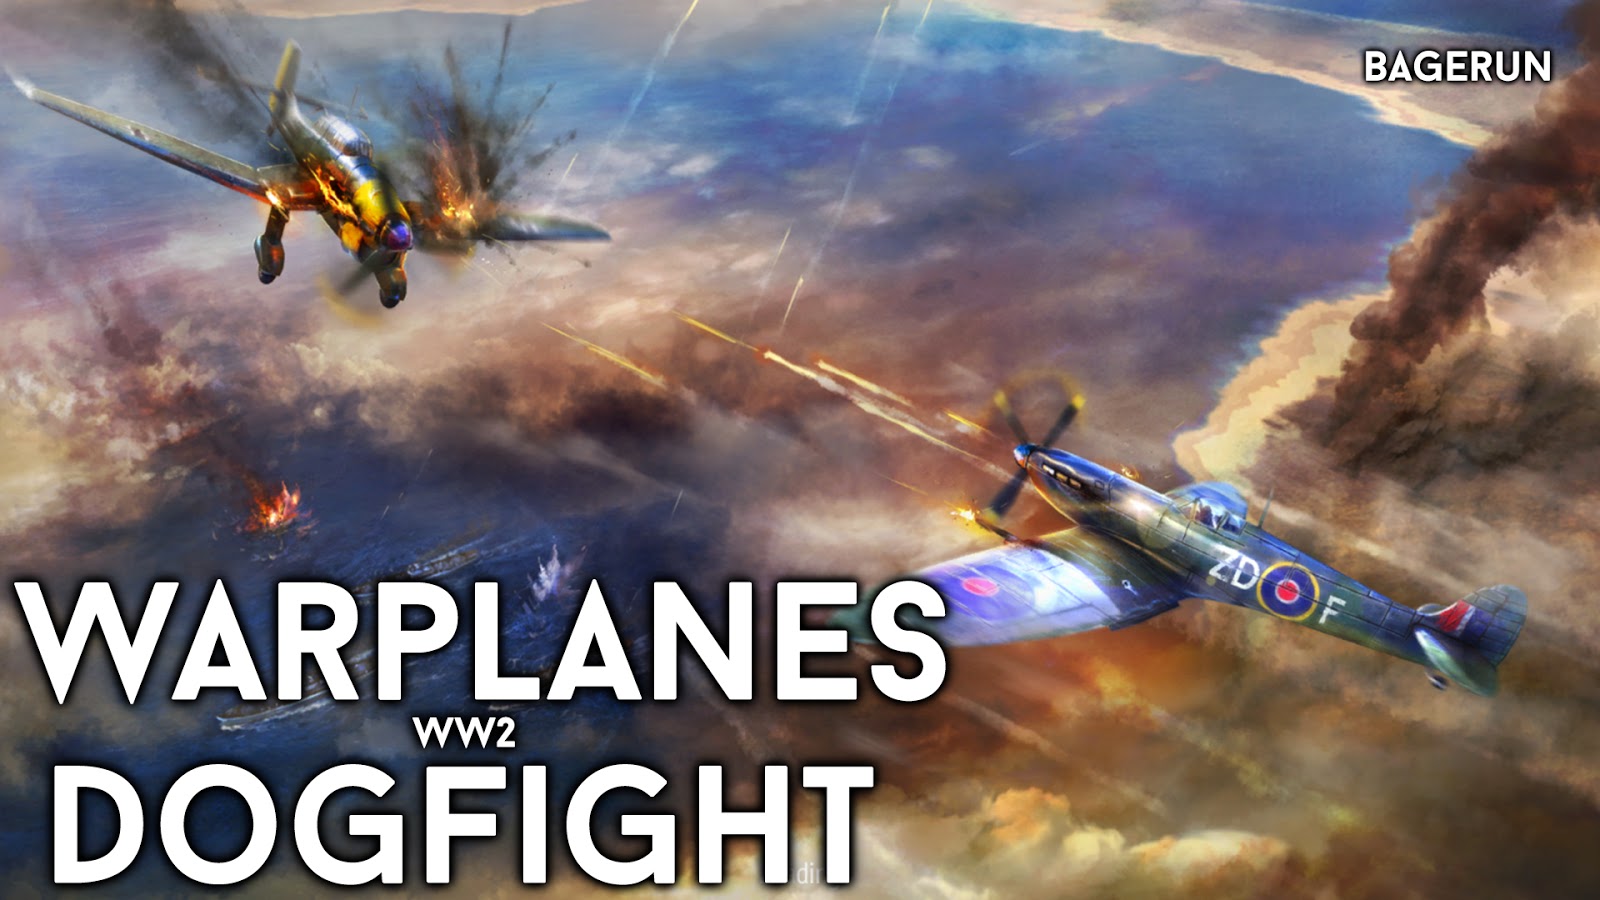 Warplanes ww2 dogfight мод много. Игра warplanes ww2 Dogfight. Игра Dogfight 2. World of warplanes ww2 Dogfight. Warplanes ww2 Dogfight мод.